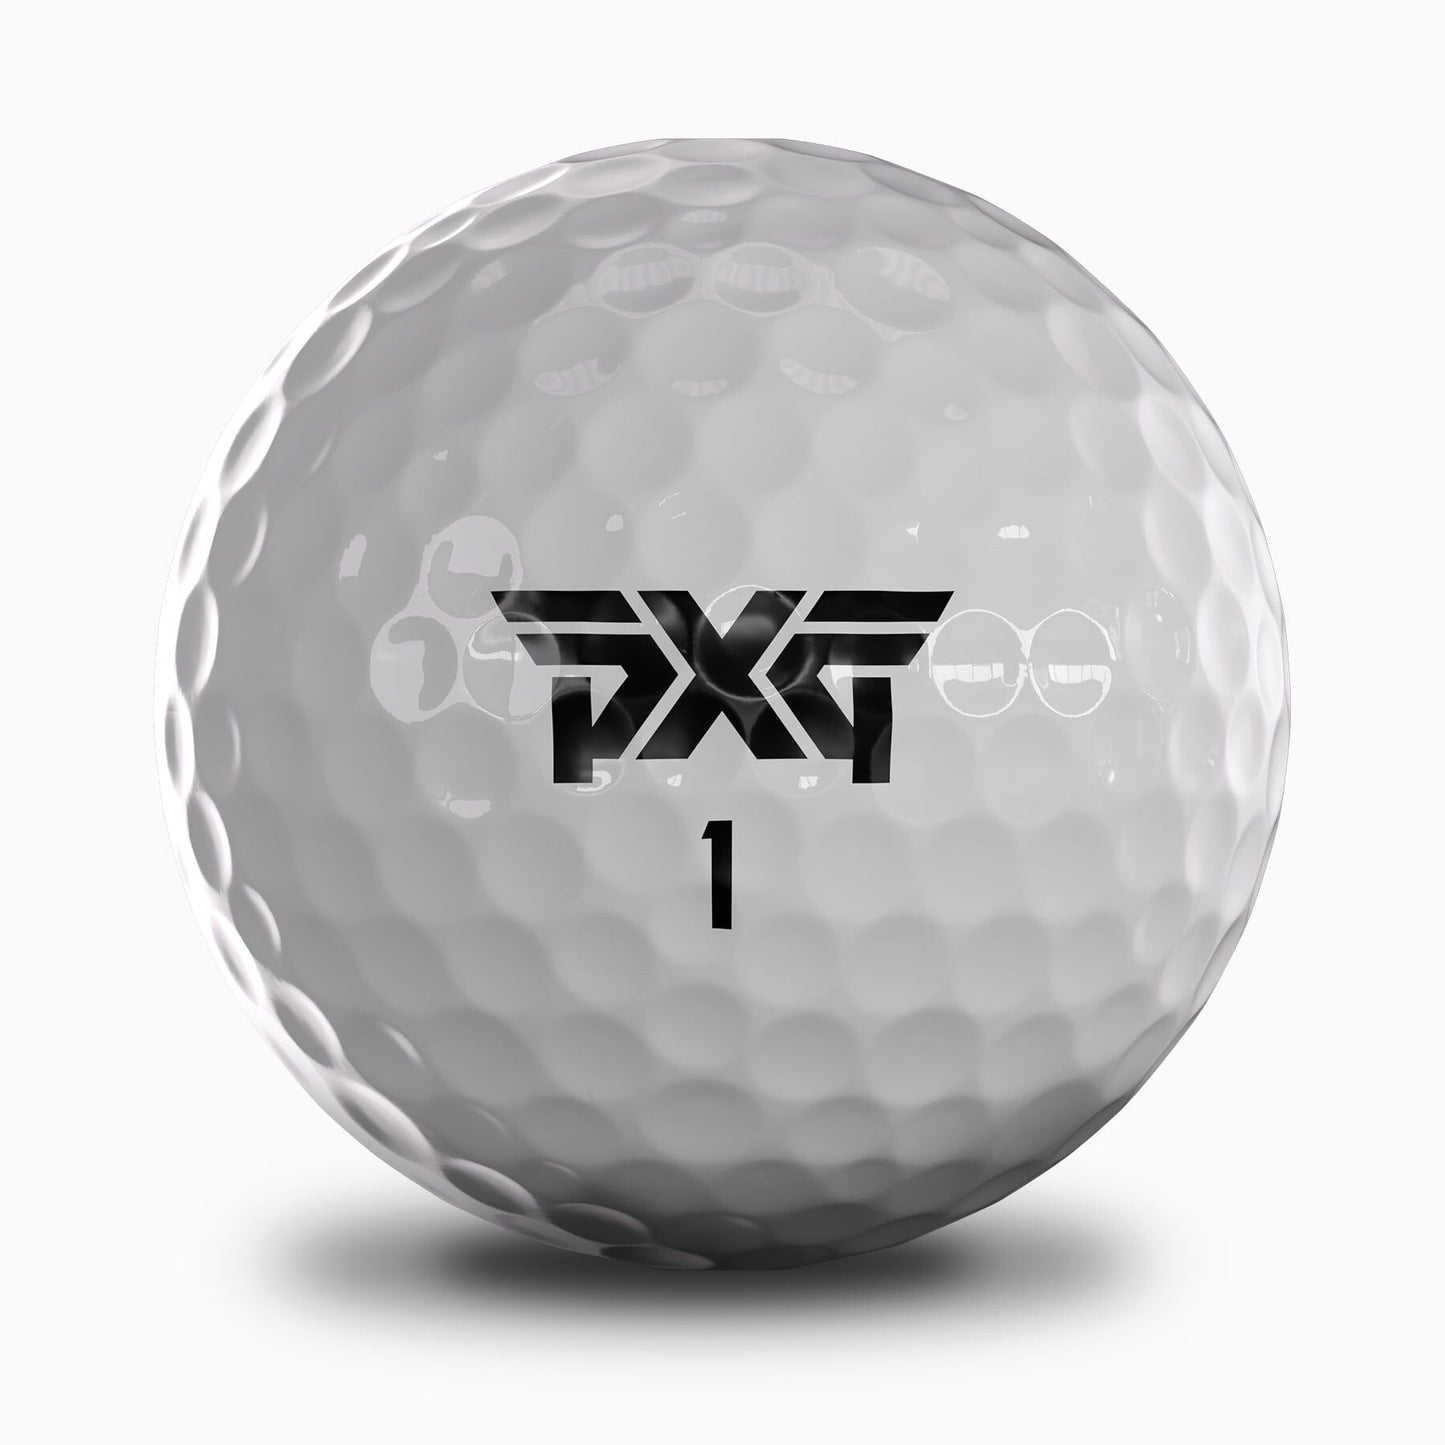 PXG Xtreme - 12 balls